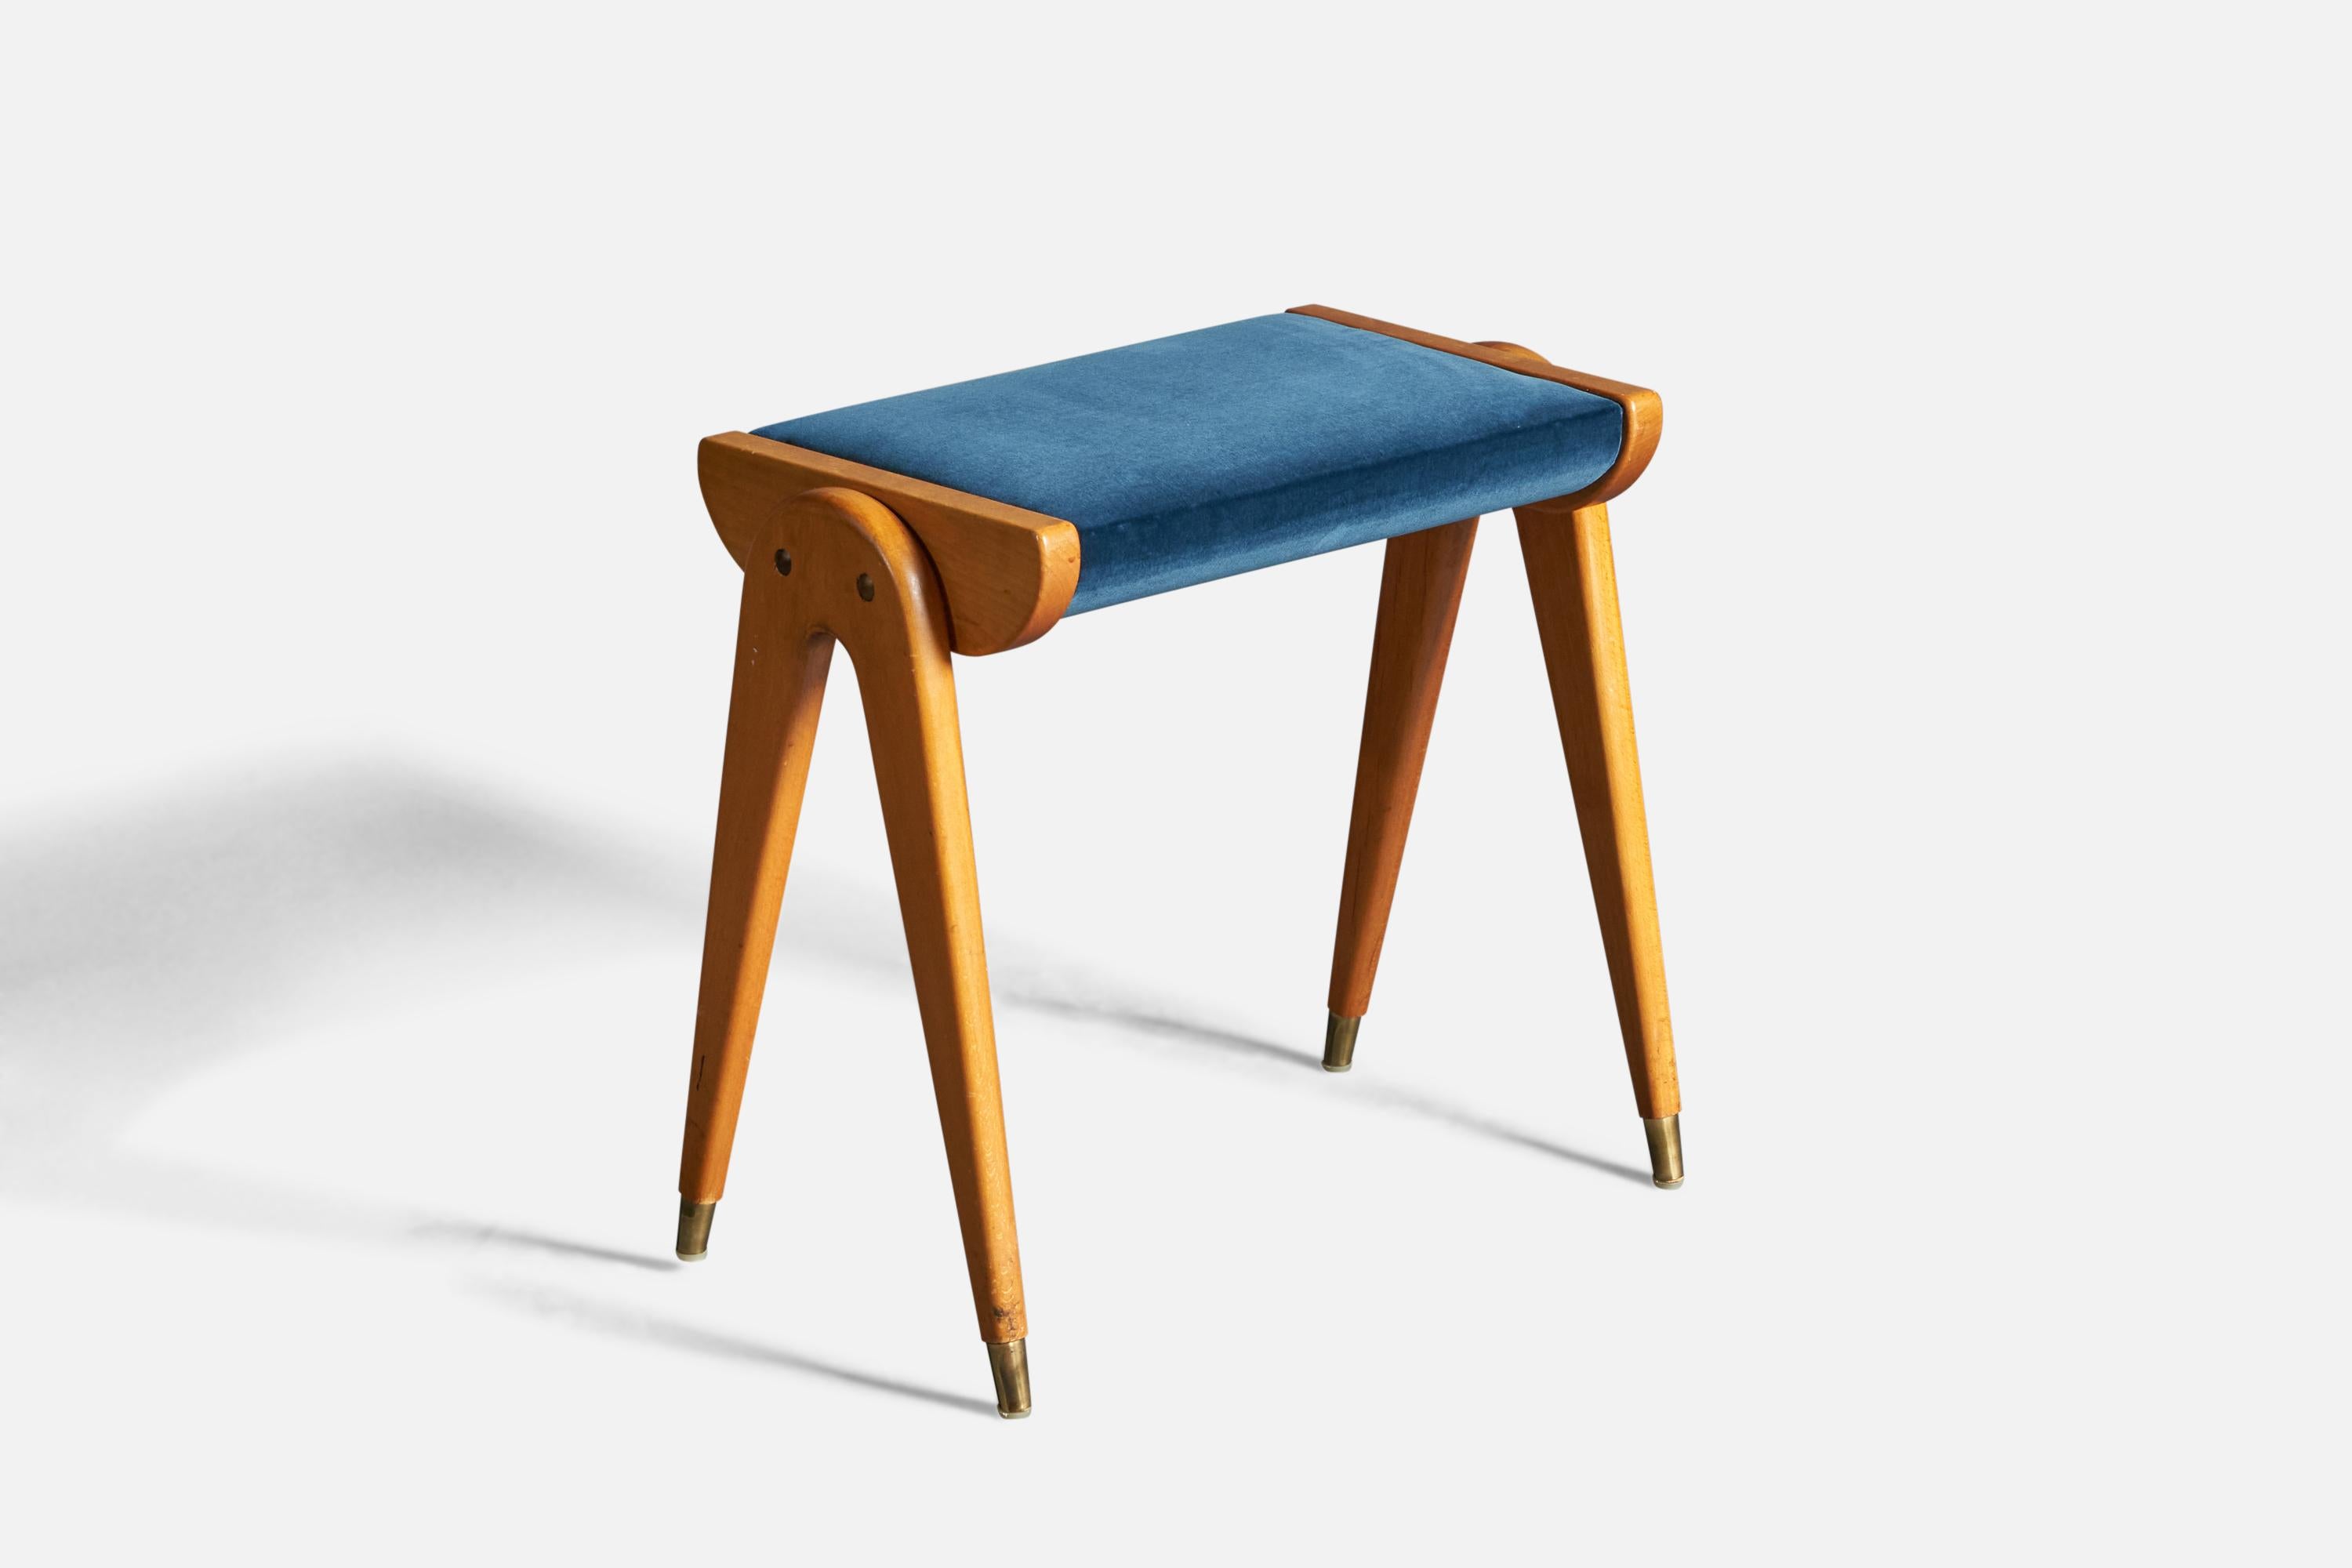 A wood, blue velvet and brass stool, design attributed to David Rosén, Sweden, c. 1950s.
